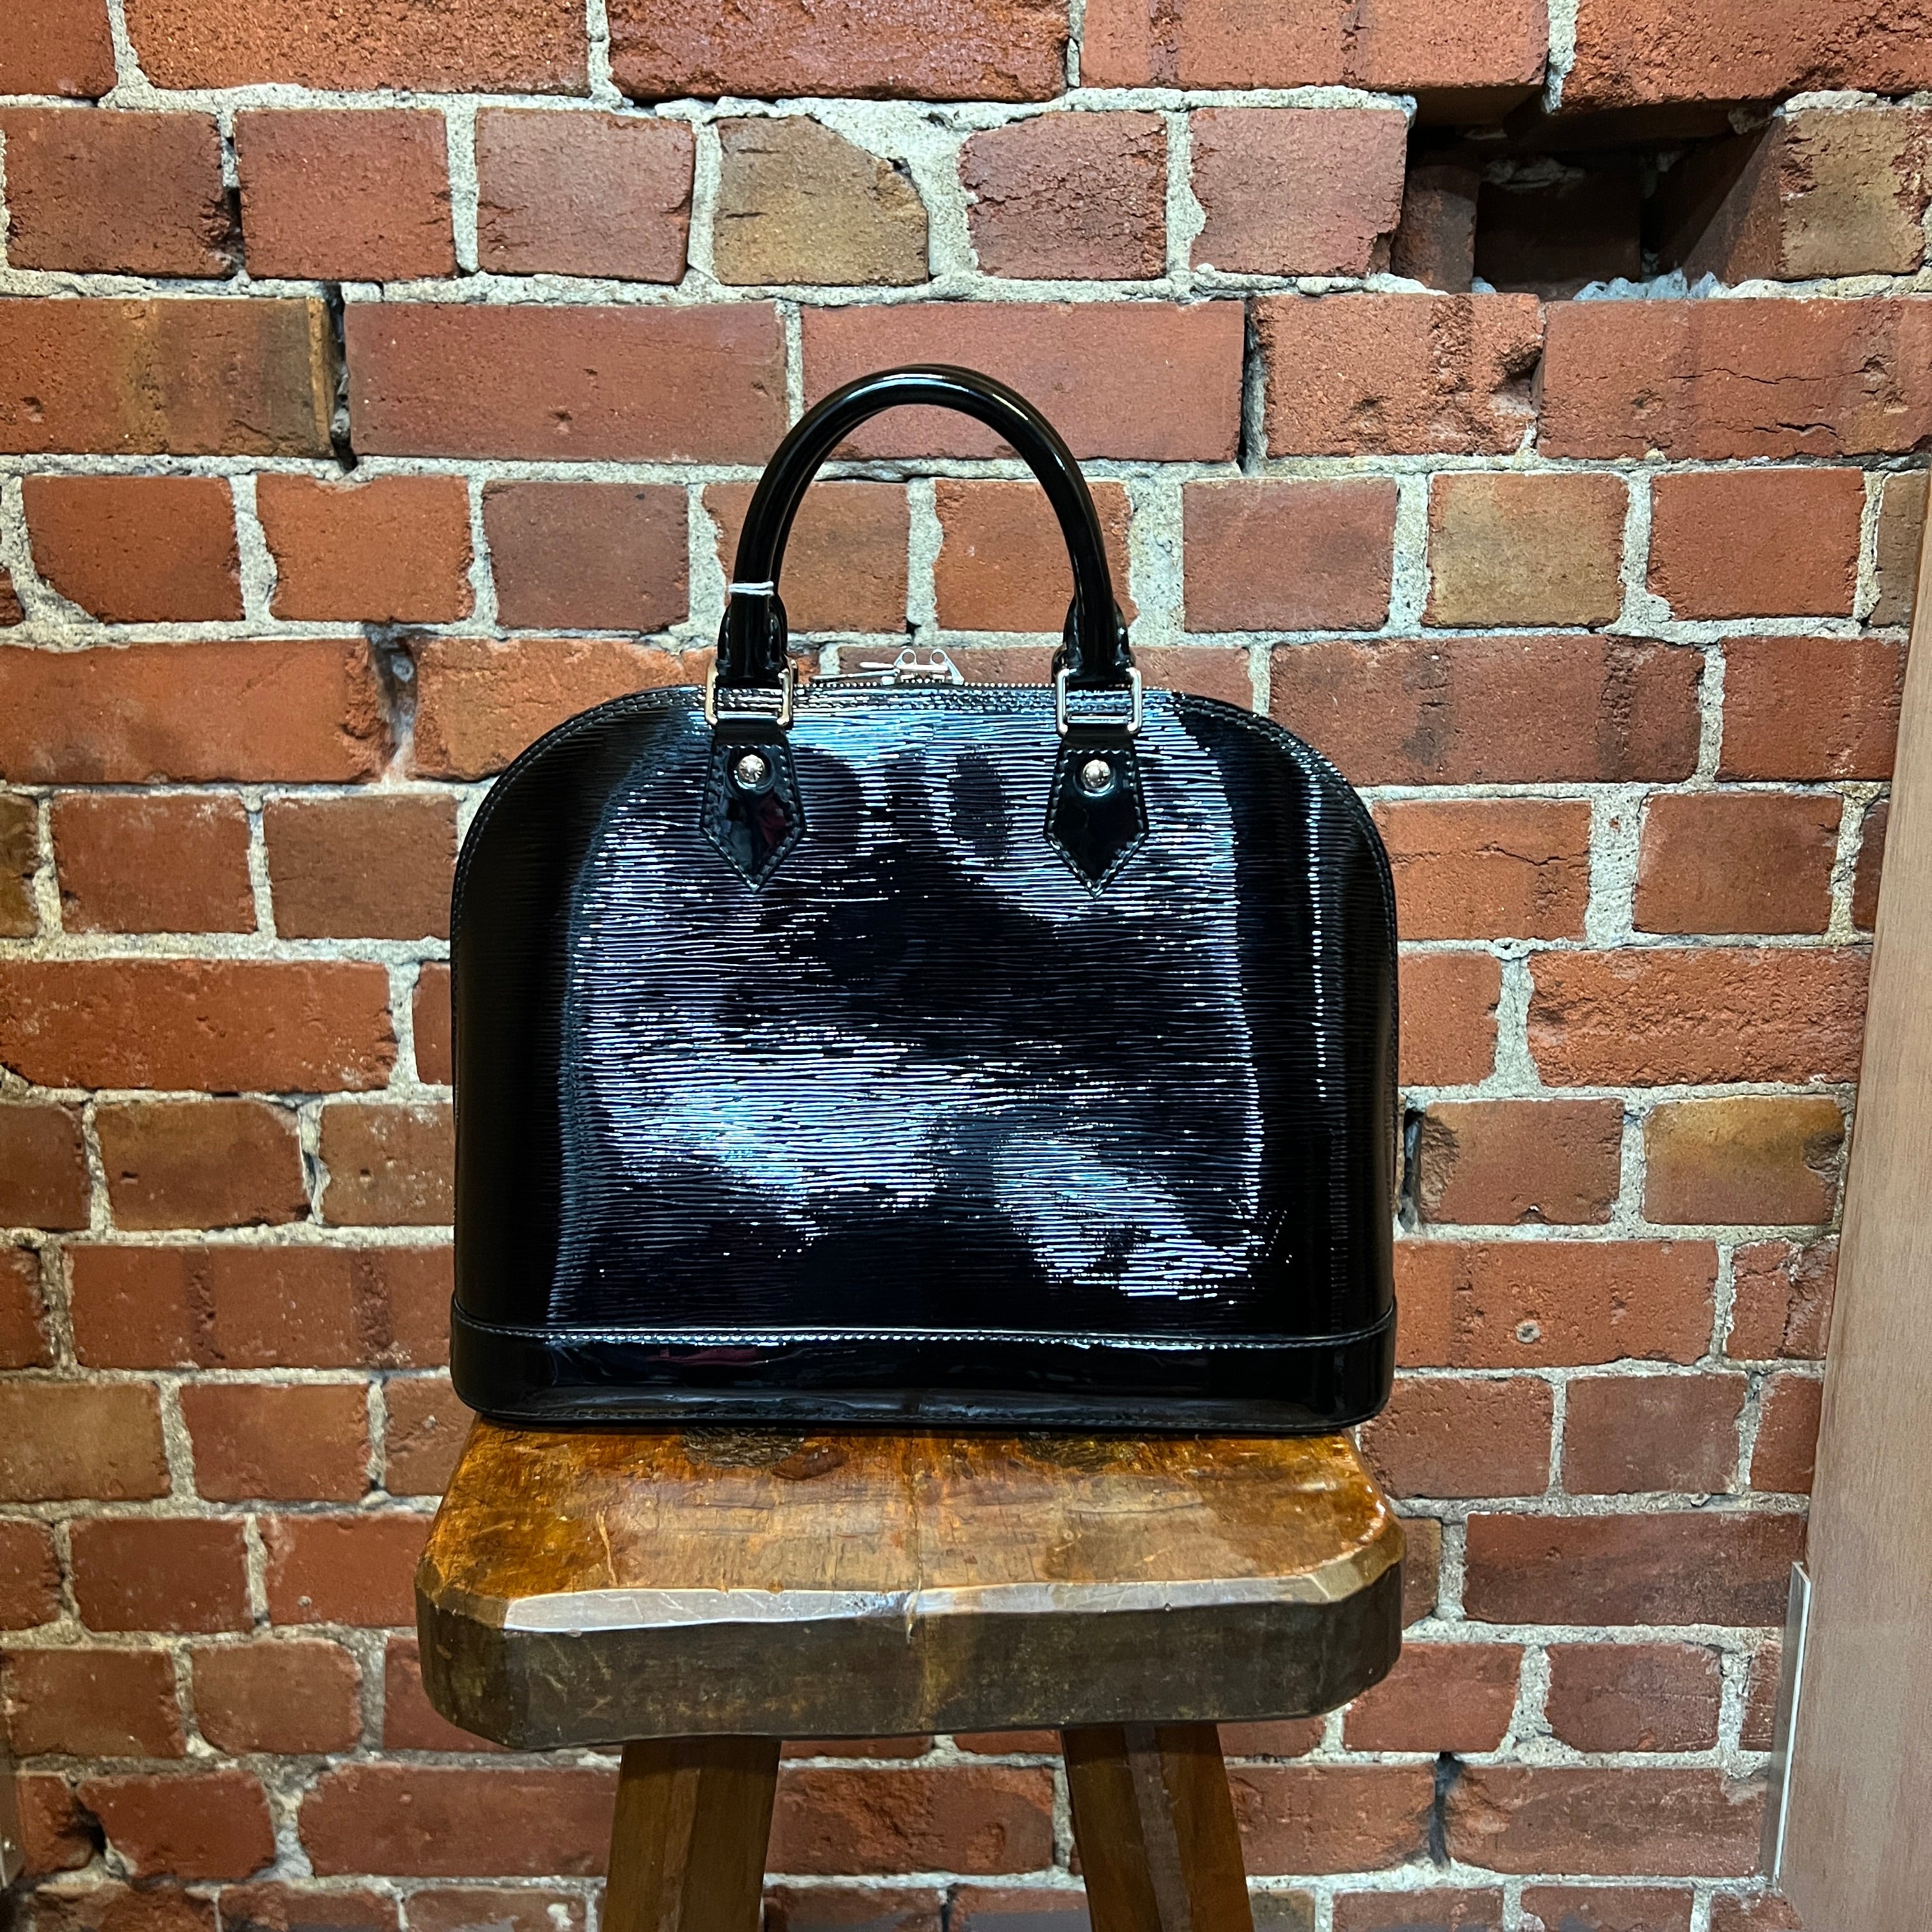 Alma patent leather handbag